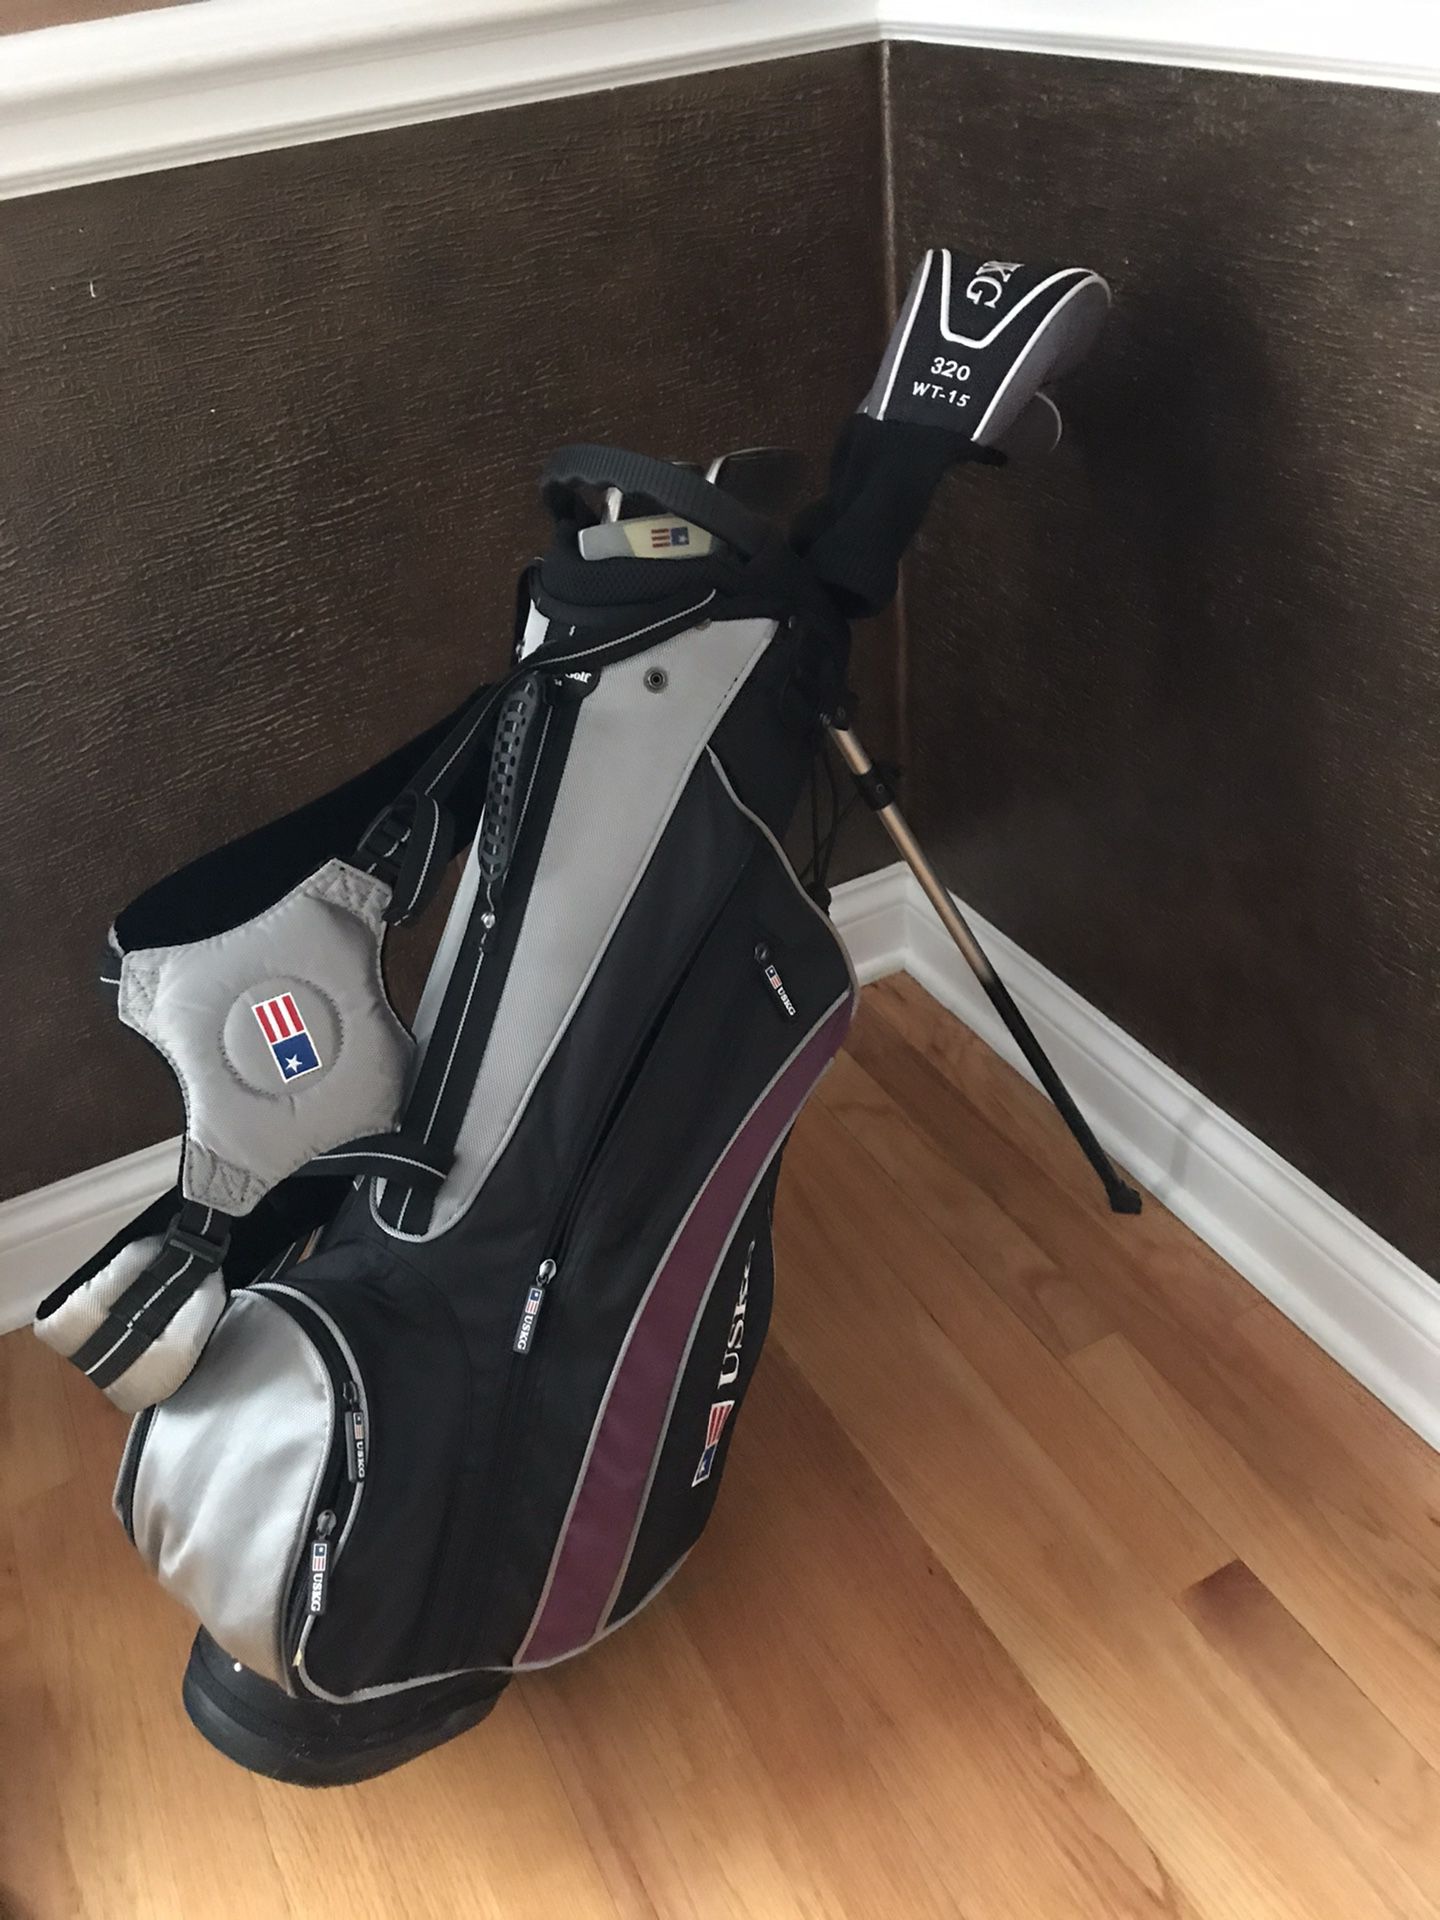 USKG UL 54 golf set with bag and 6 clubs